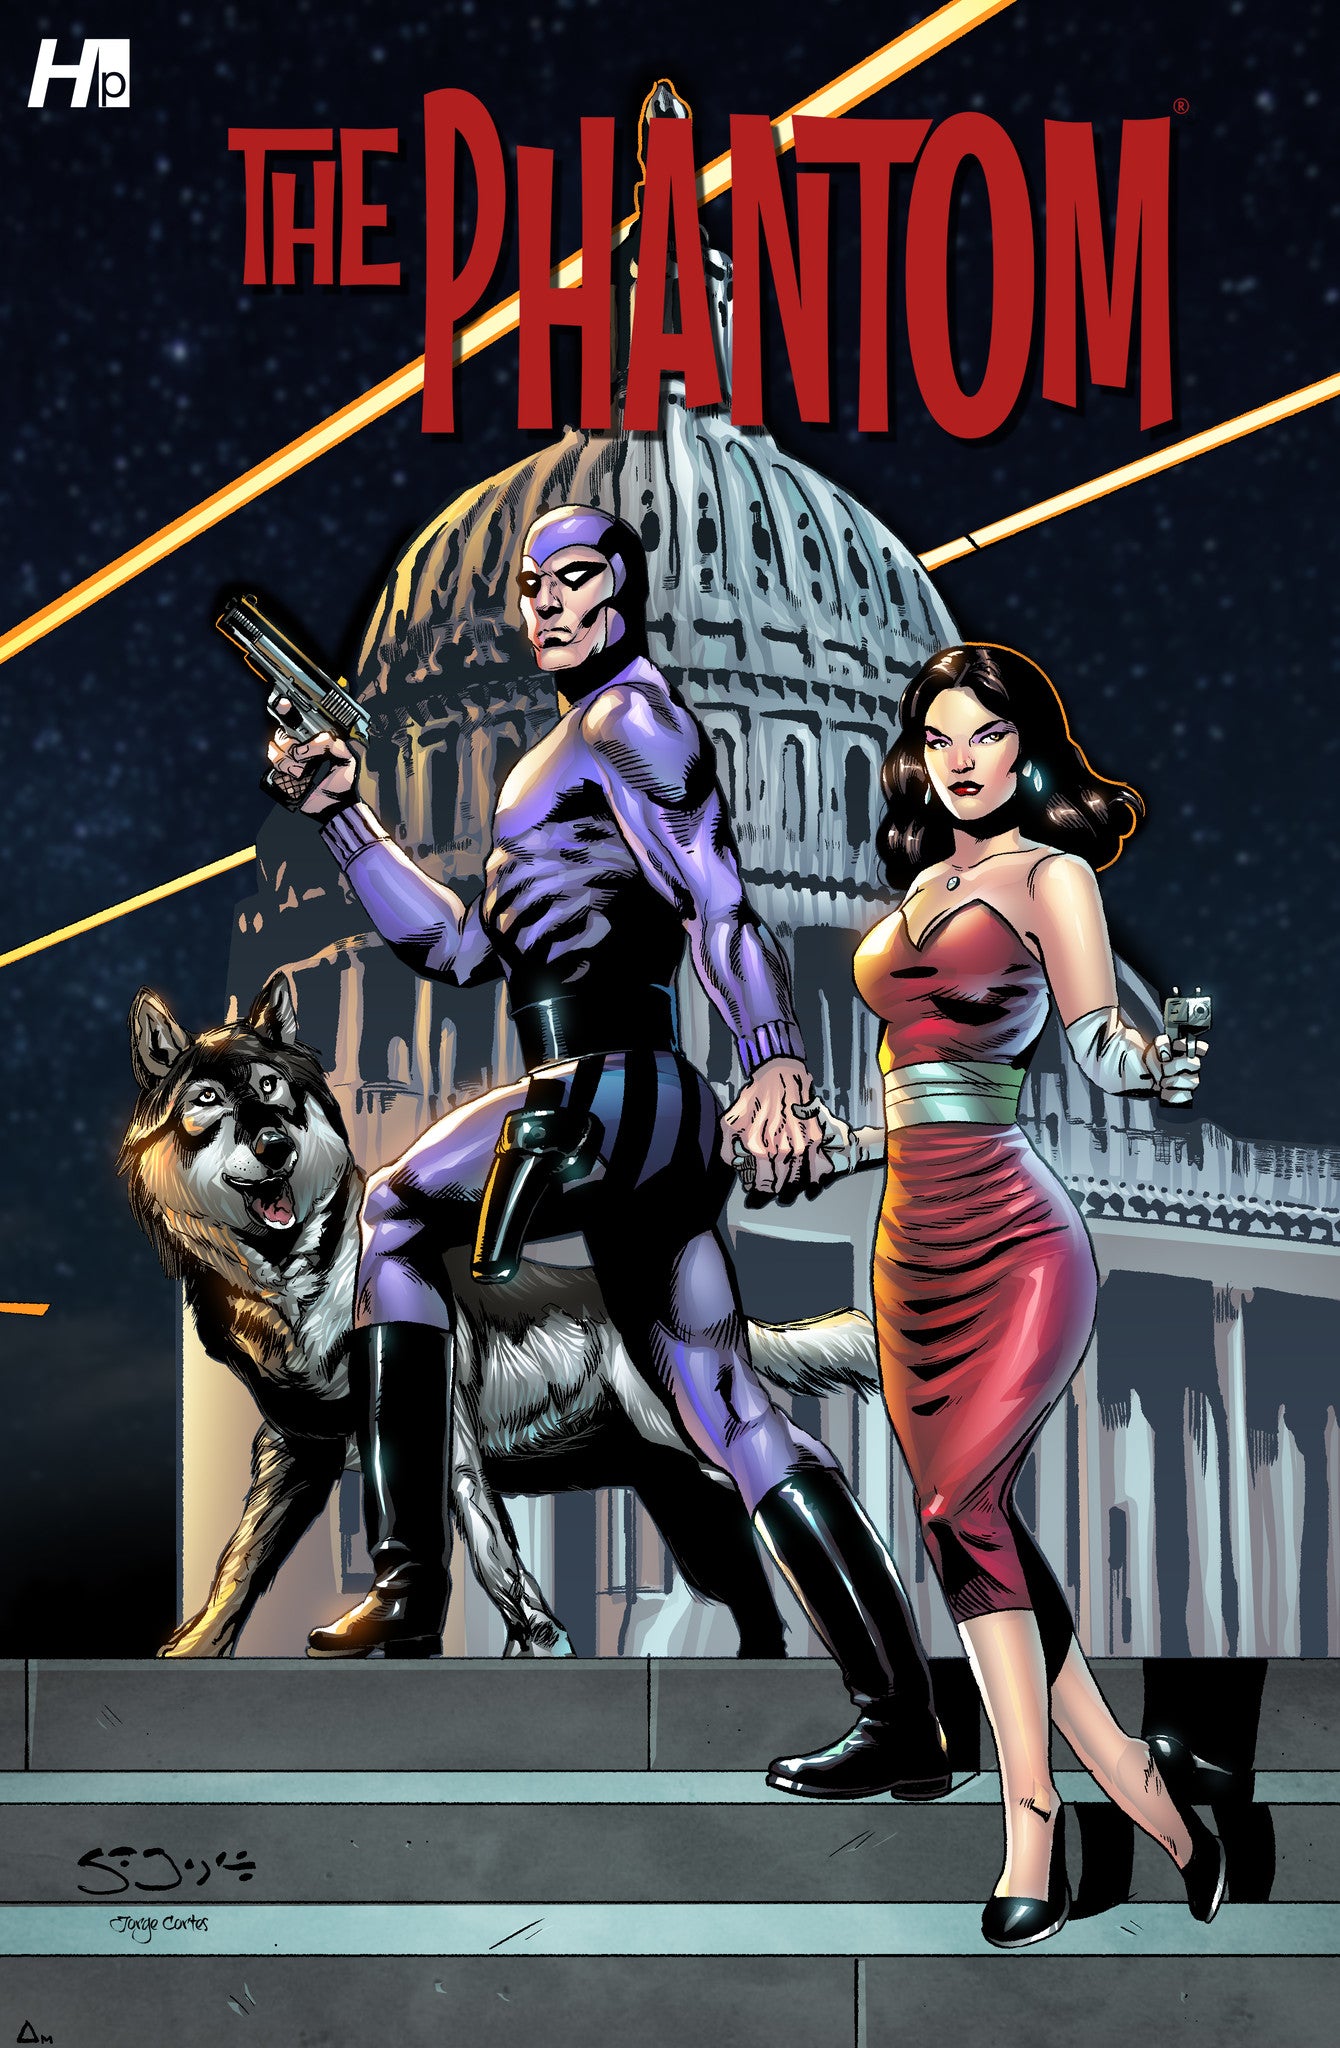 The Phantom: President Kennedy's Mission Issue #1b